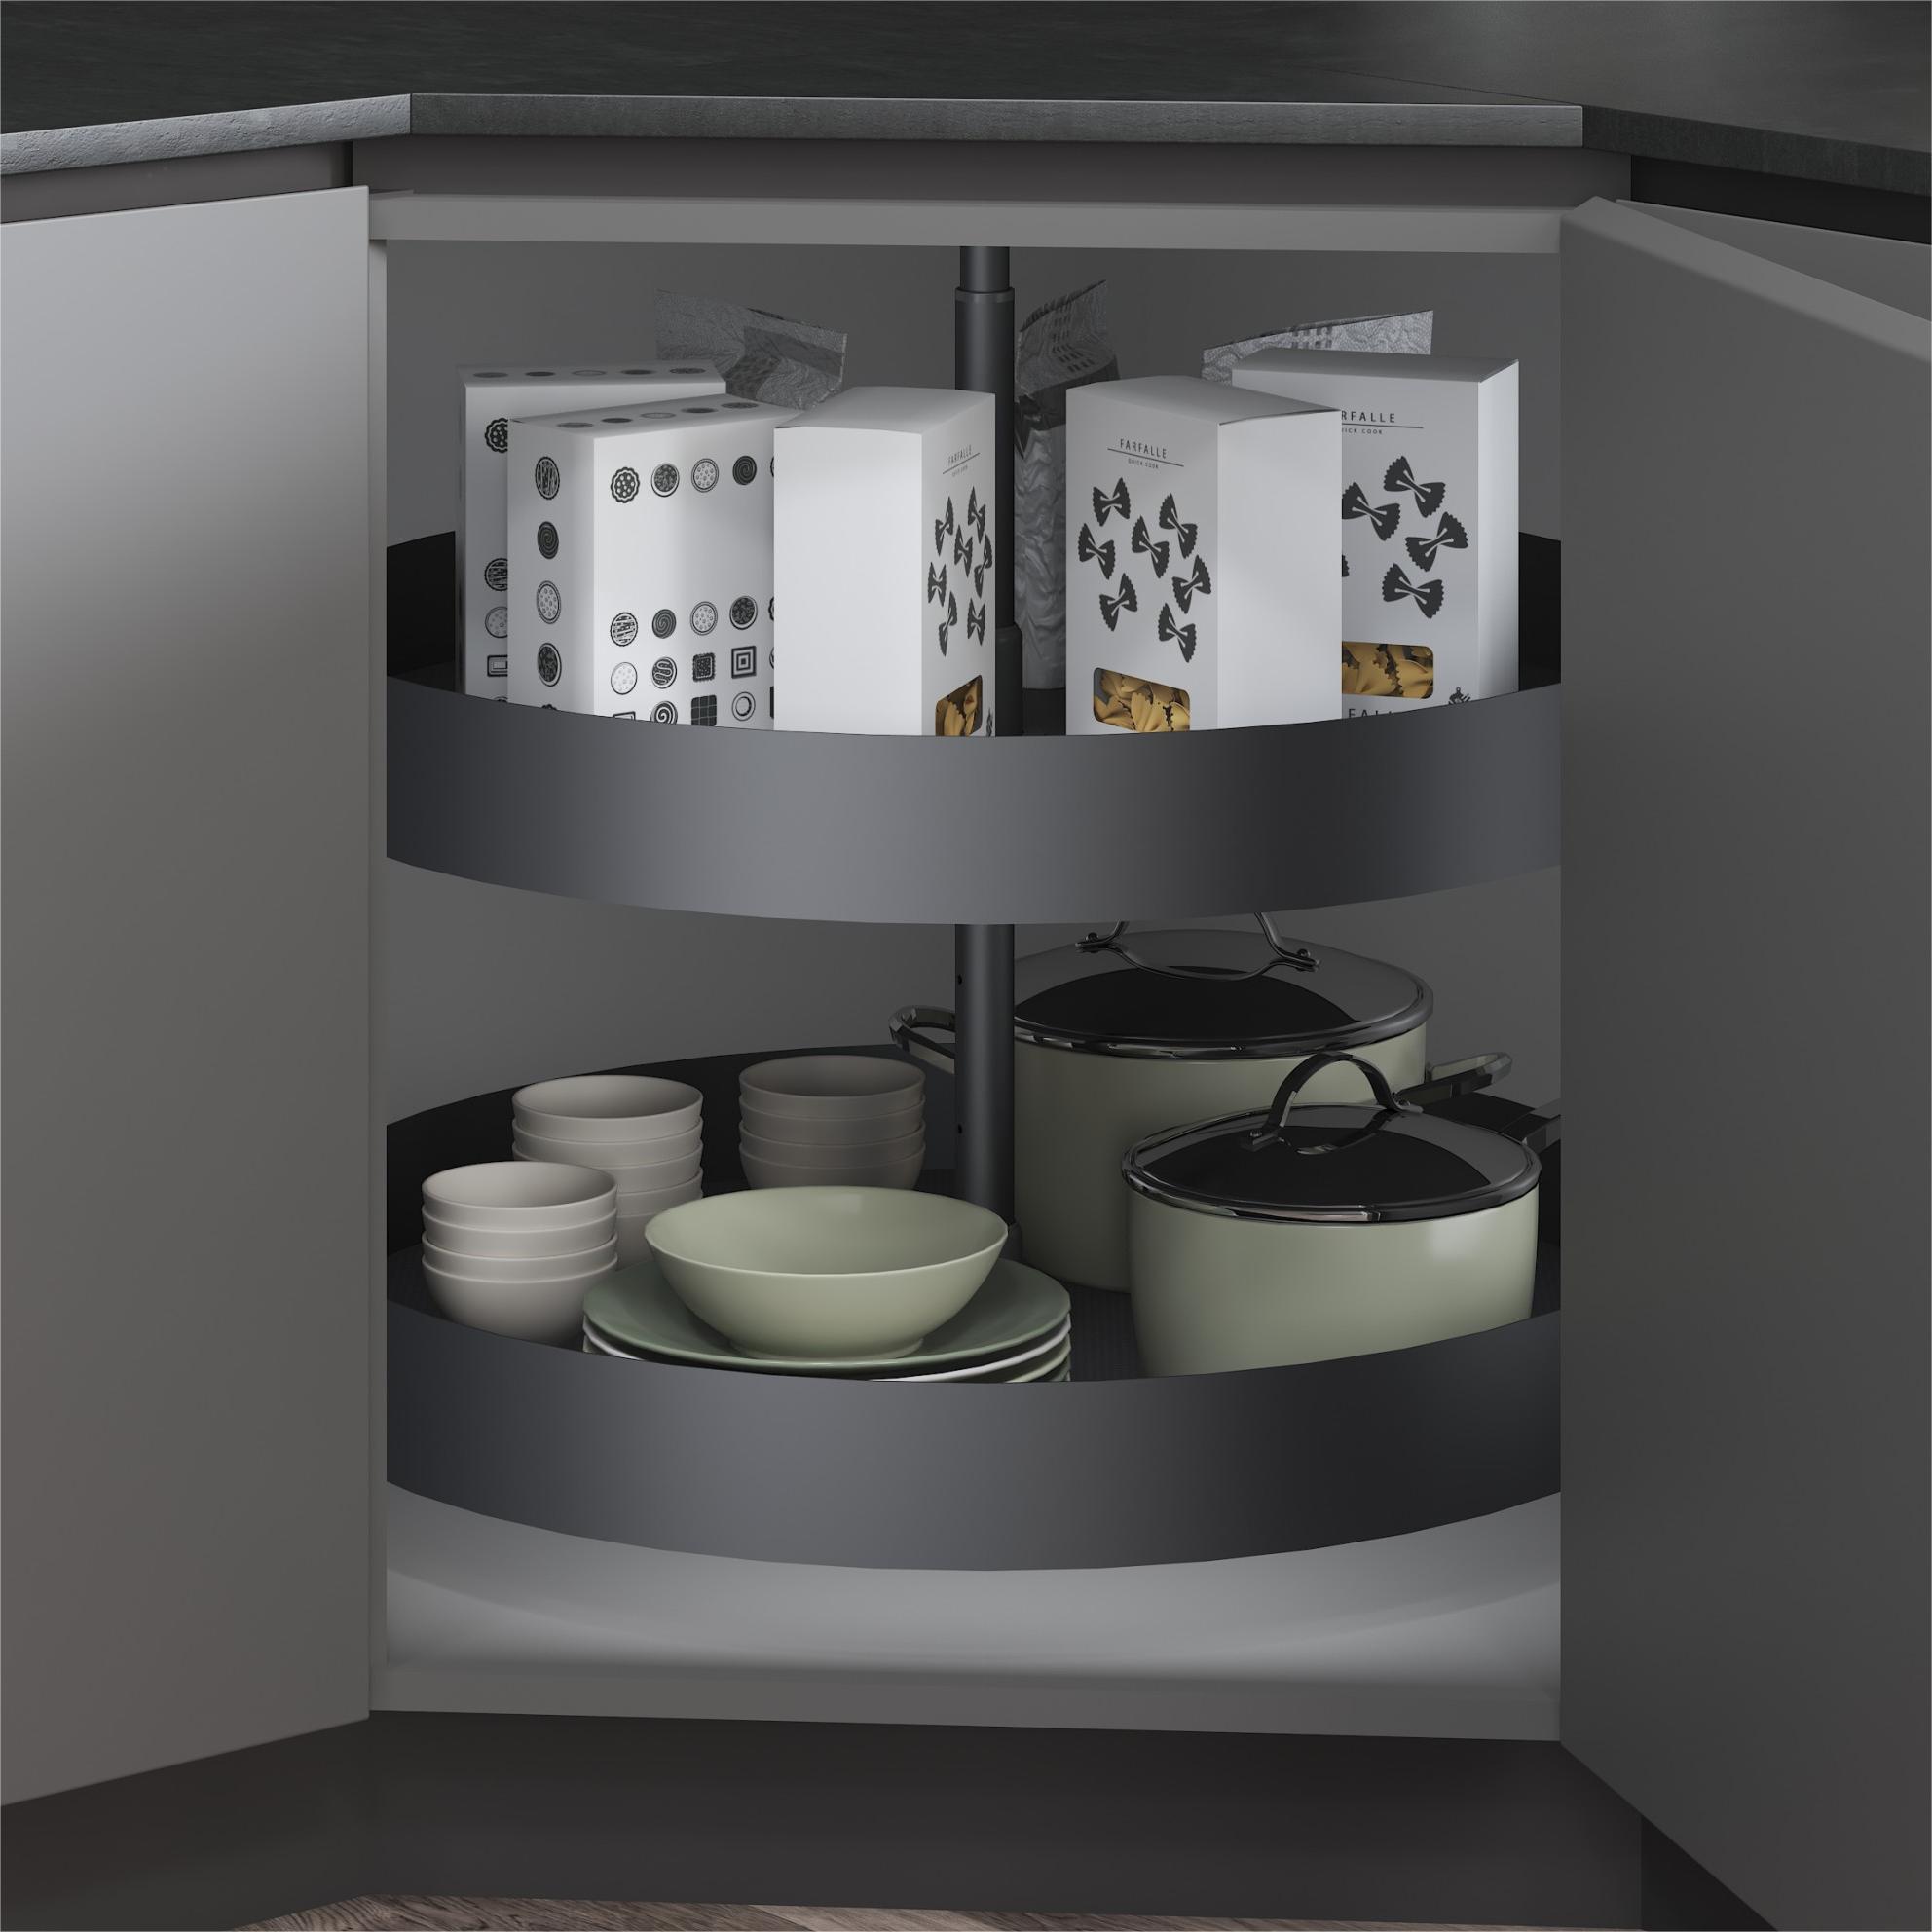 Maximize Storage with Kitchen Storage System Baskets